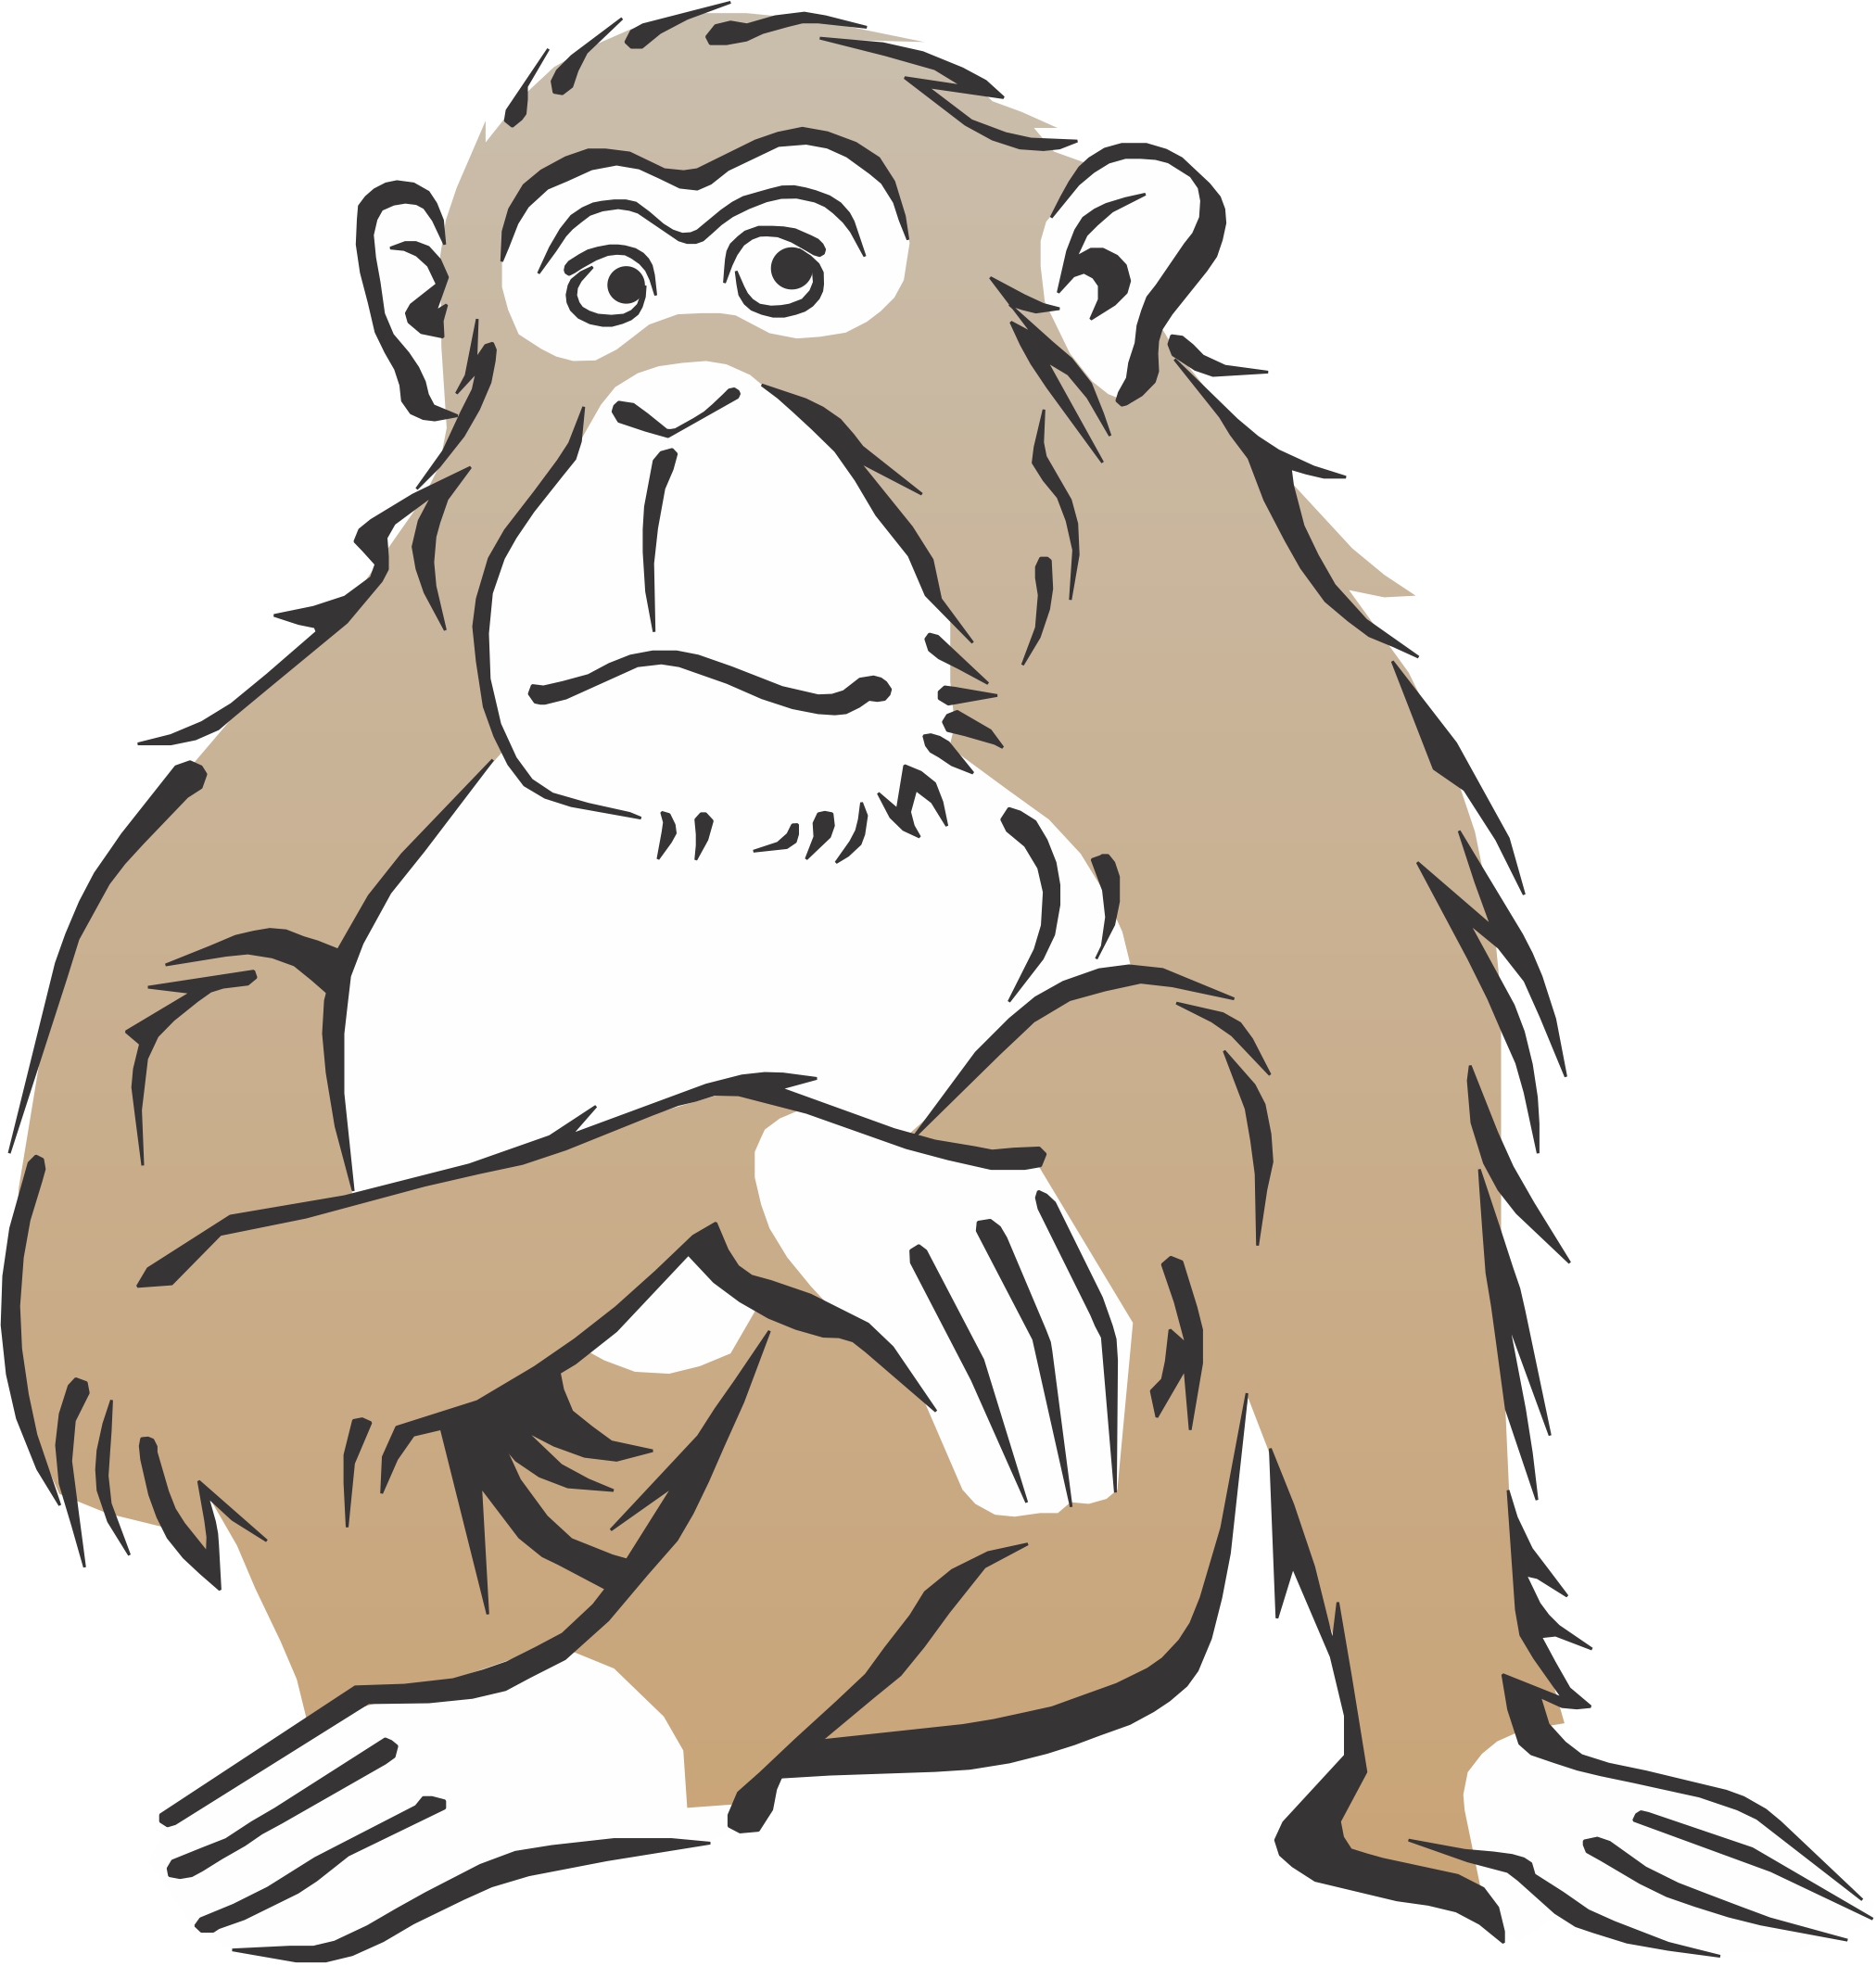 Sad Monkey Cartoon Images   Pictures Becuo